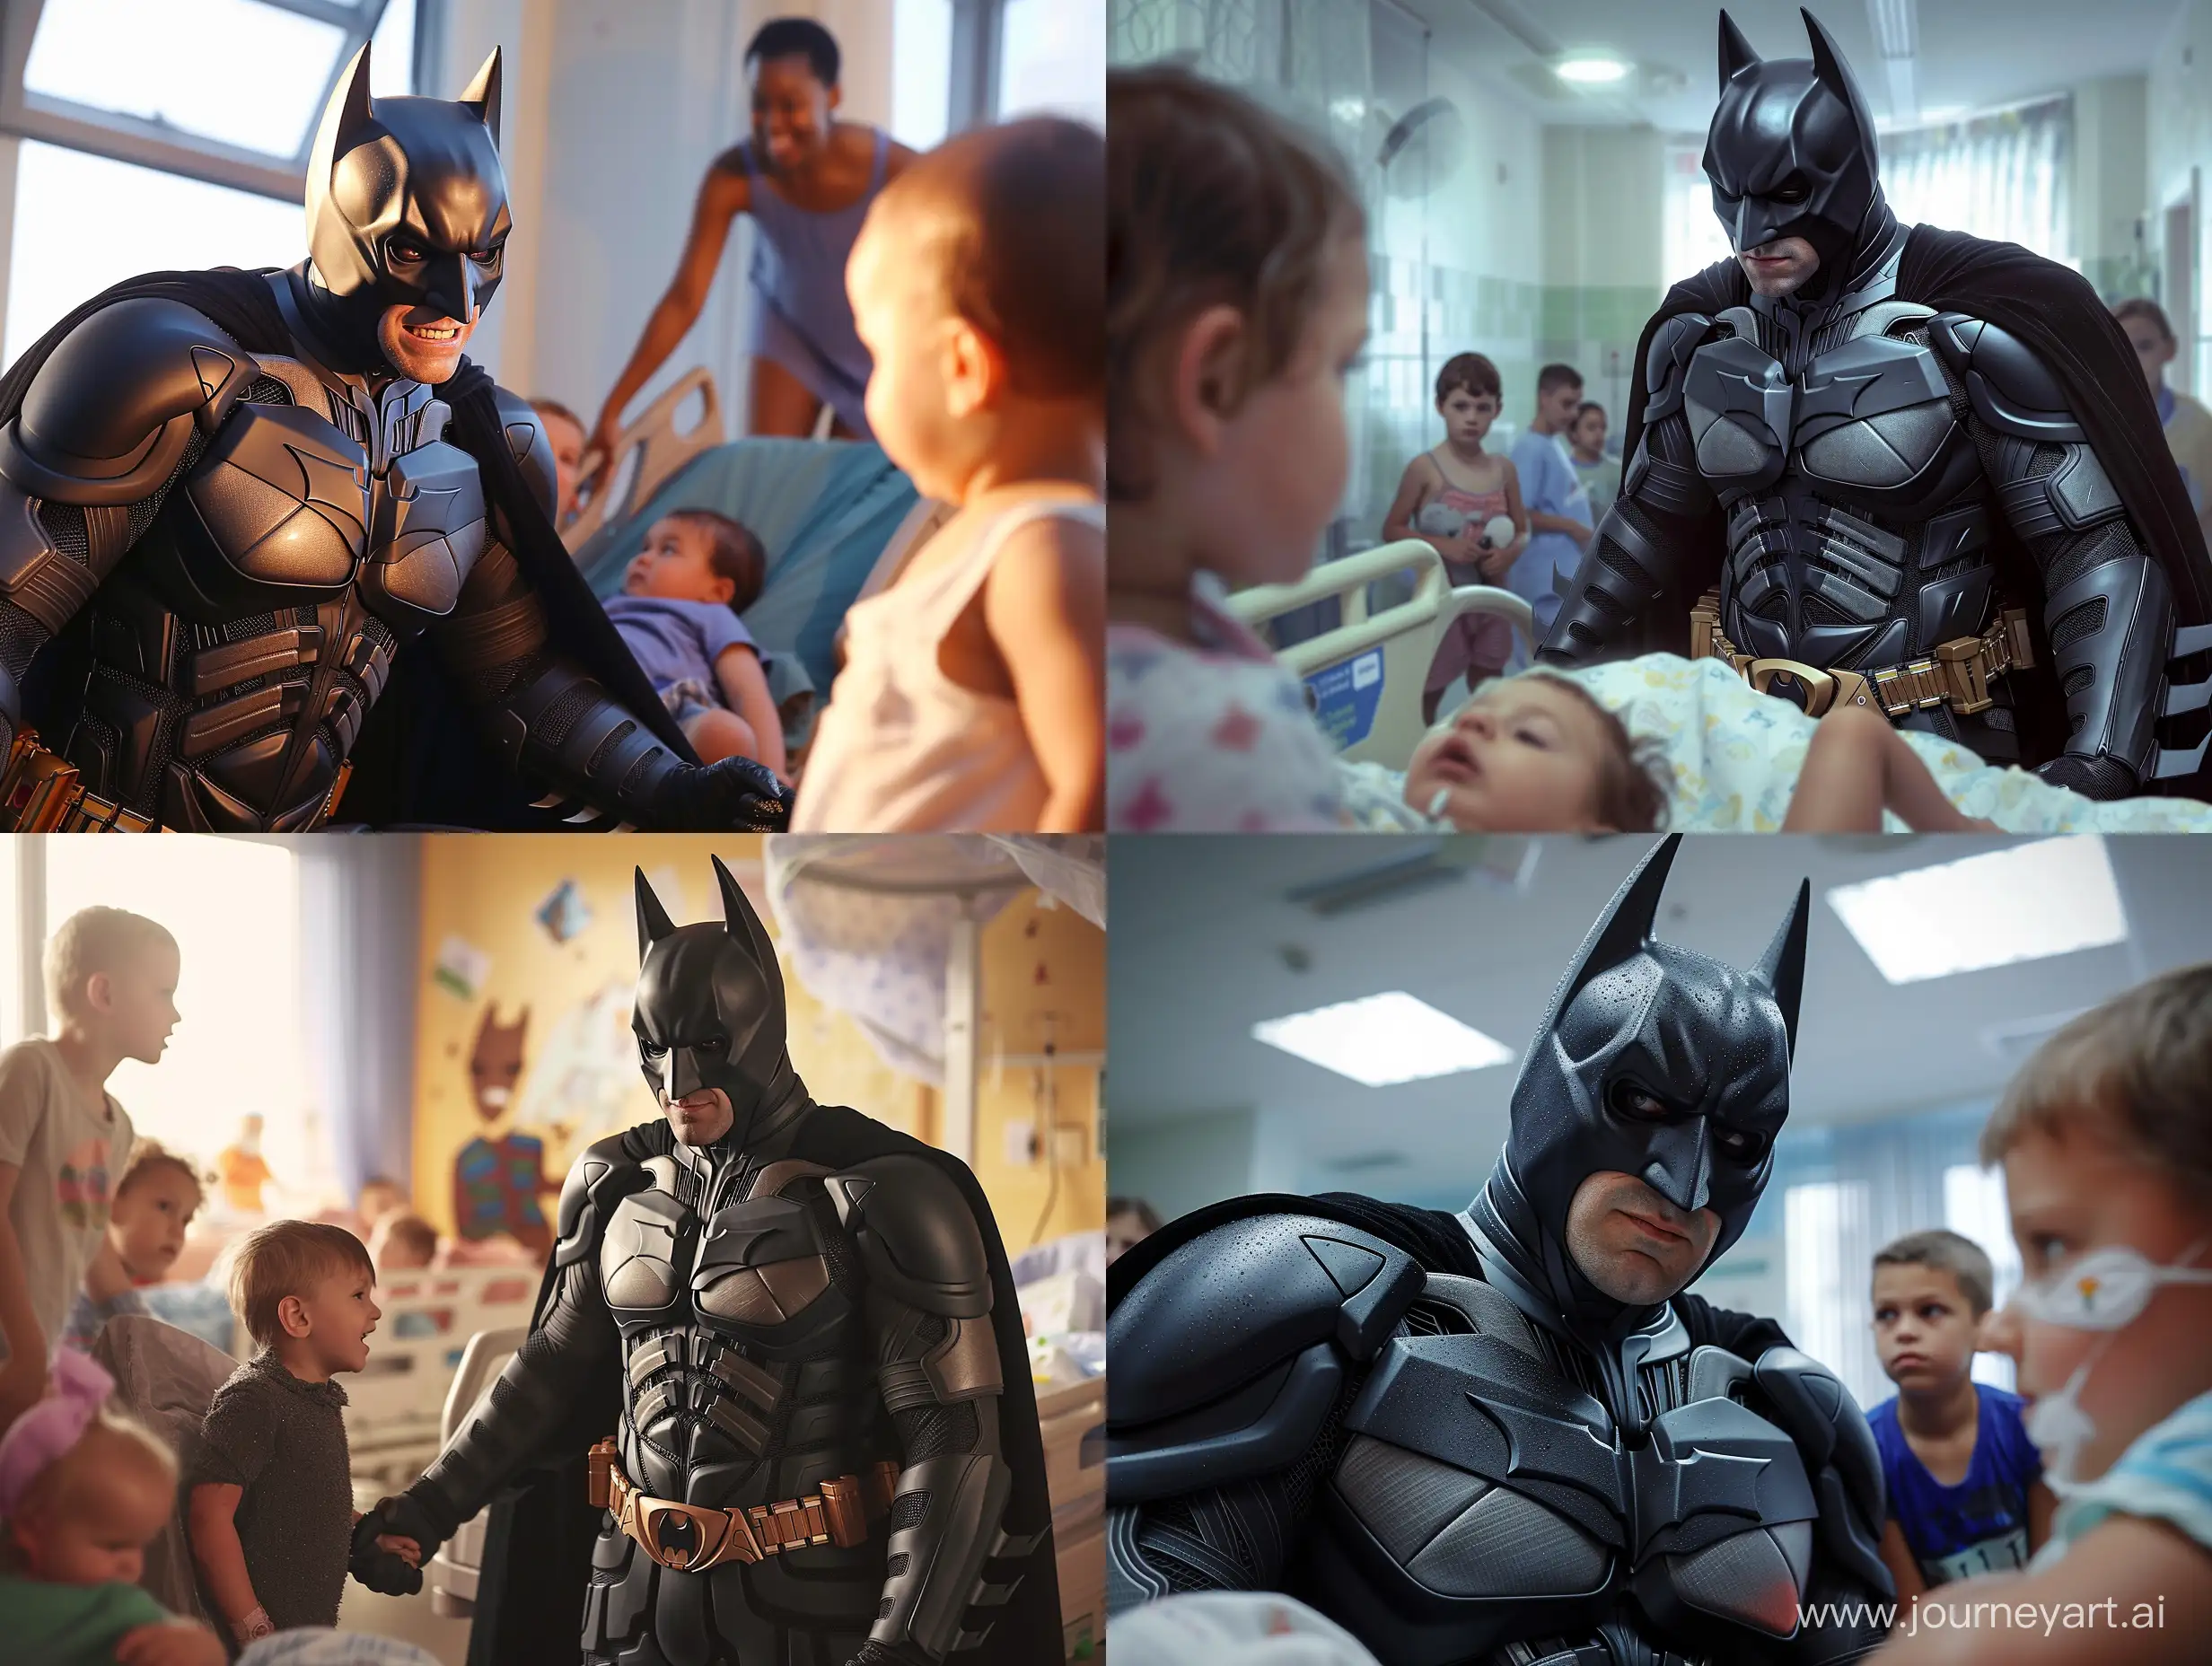 Batman-Visiting-Sick-Children-in-Realistic-Full-Body-Portrait